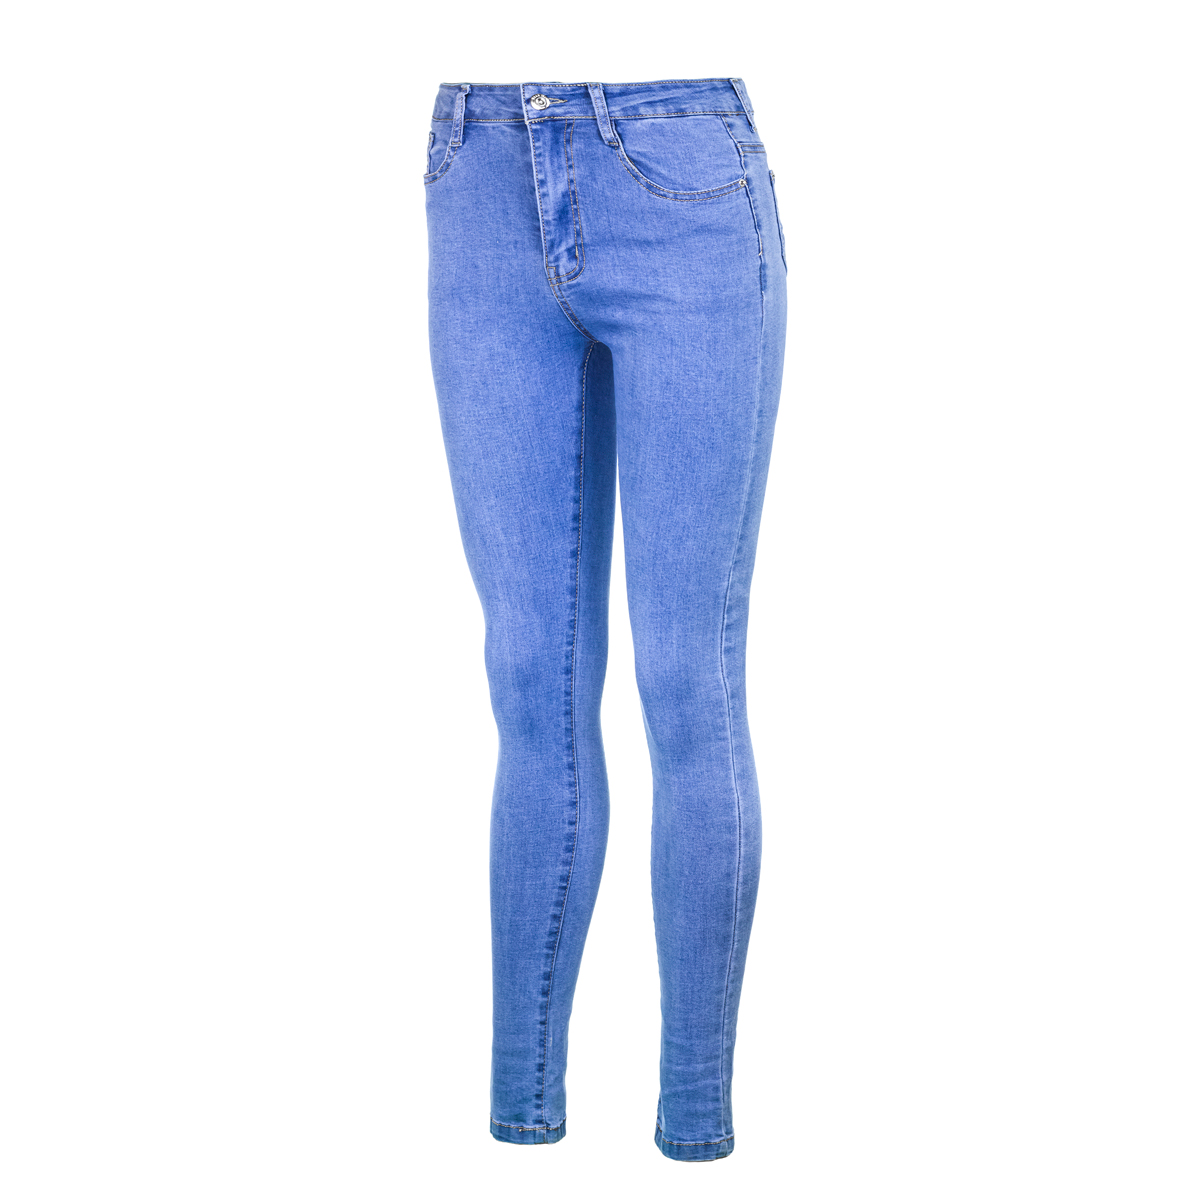 Жен. джинсы арт. 12-0155 Голубой р. 29 Китай, размер 29 - фото 2